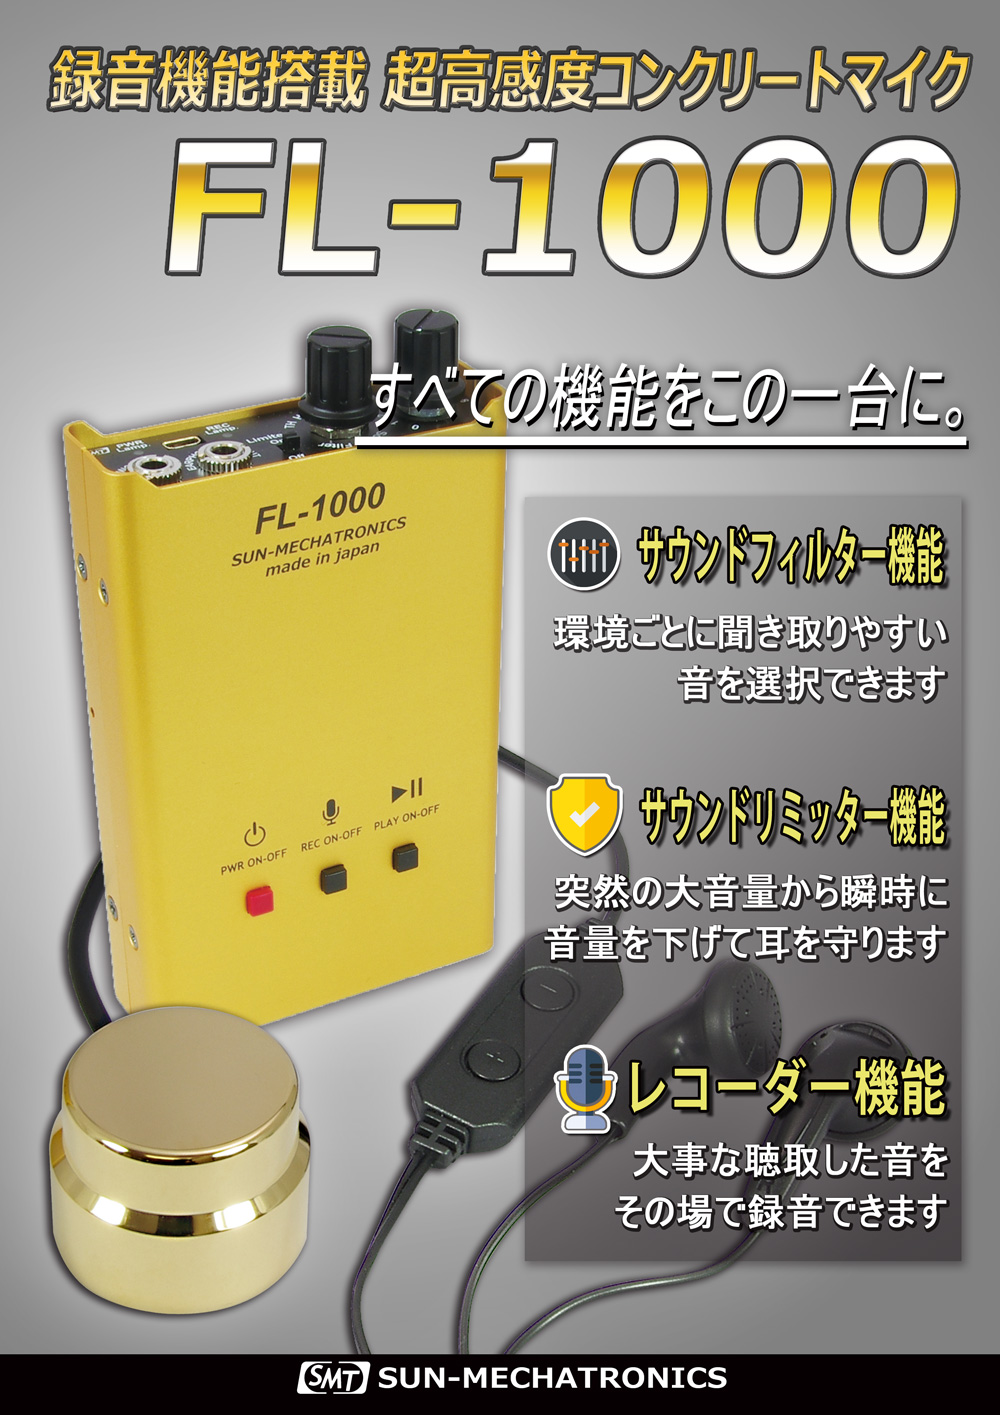 FL-1000 | 製品情報 | サンメカトロニクス